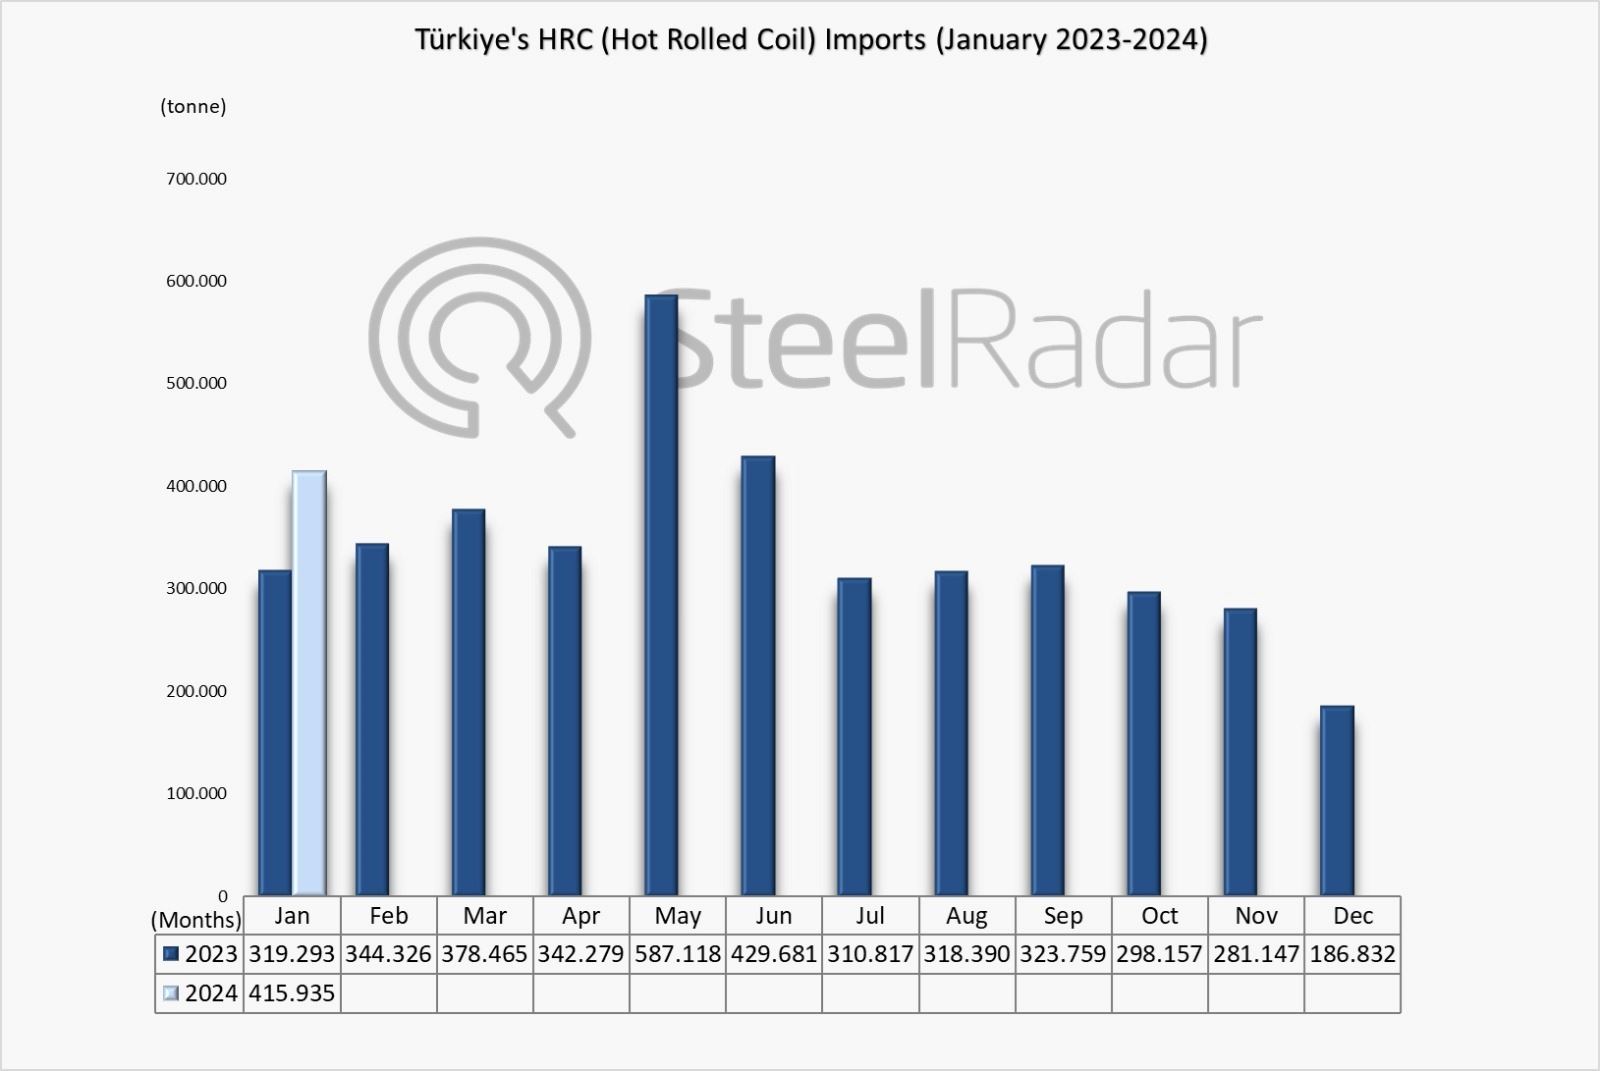 Türkiye's HRC imports increased by 30.3% in January